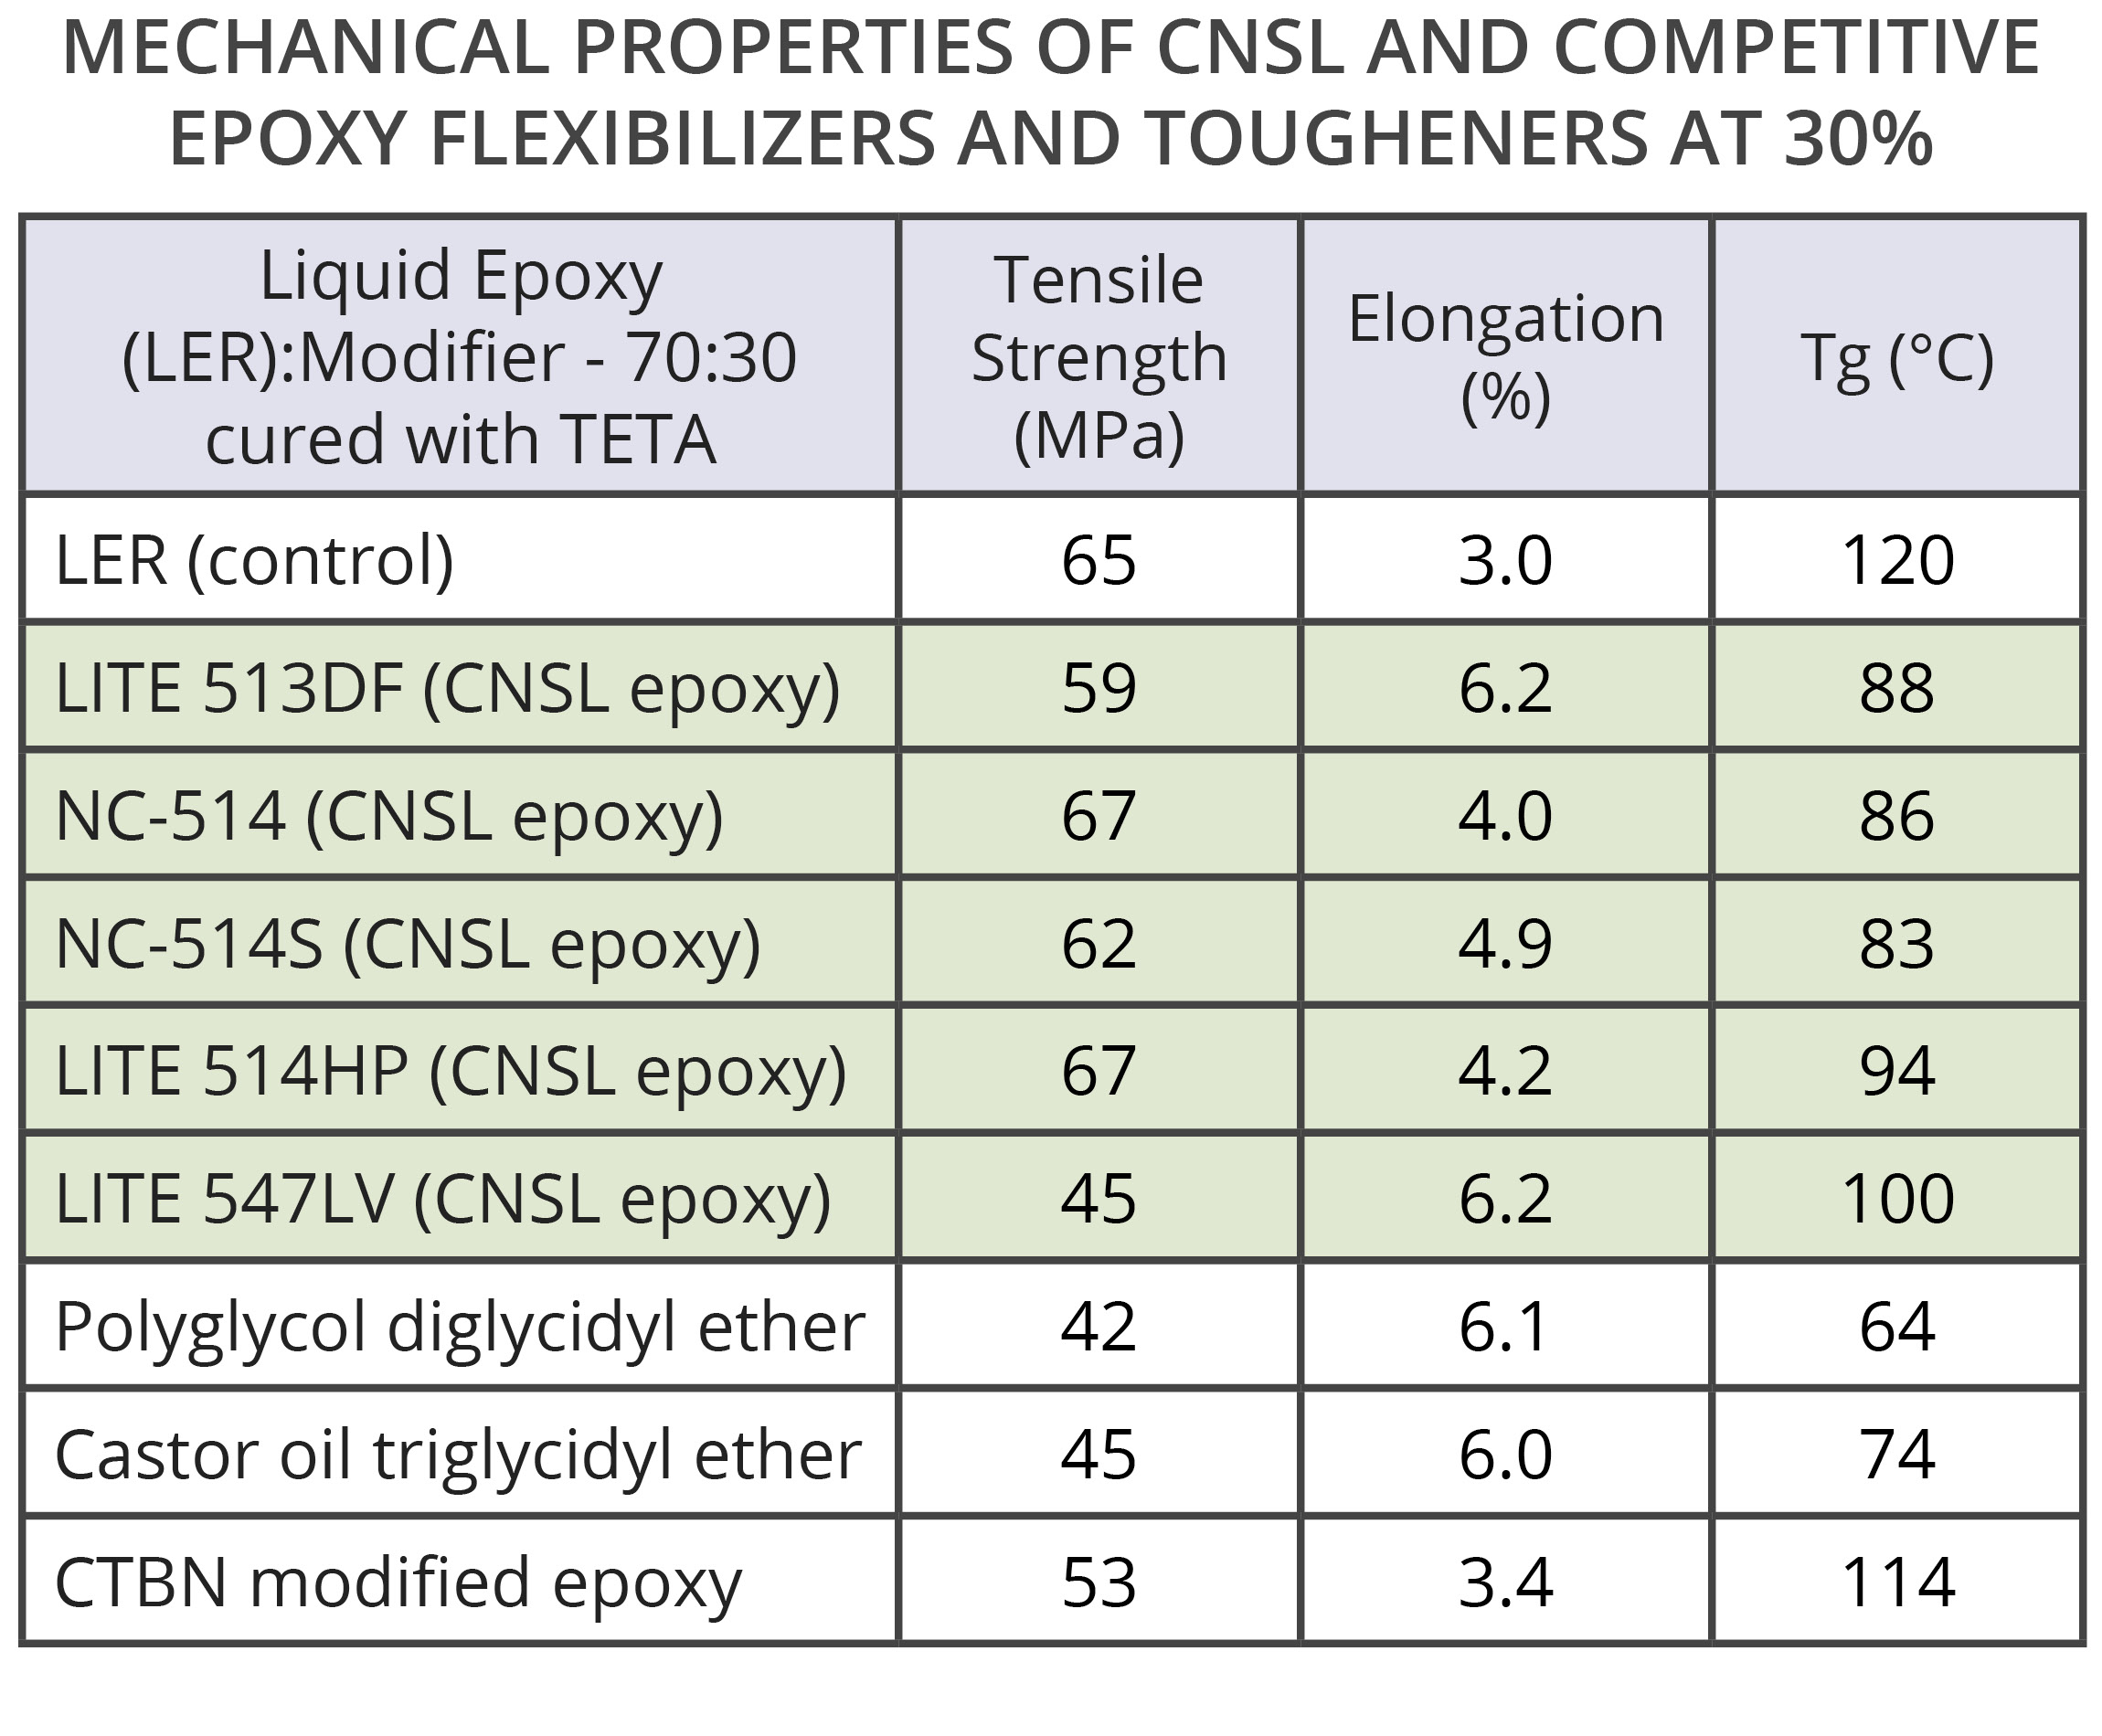 CNSL epoxy modifiers provide flexibility and toughness